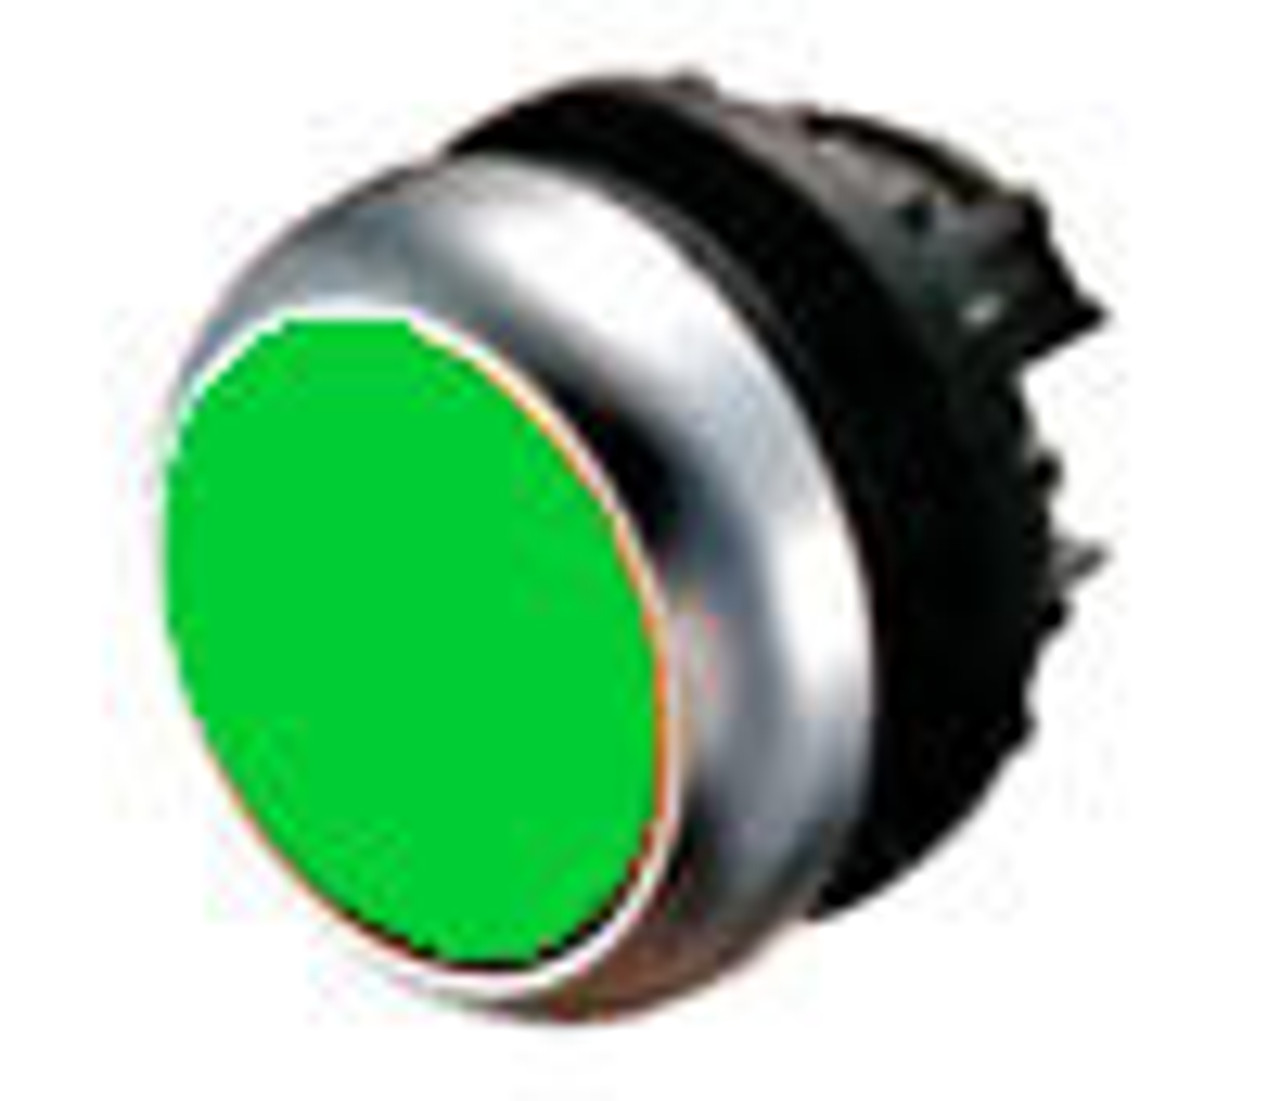 Moeller M22-DRL-G green illuminated pushbutton